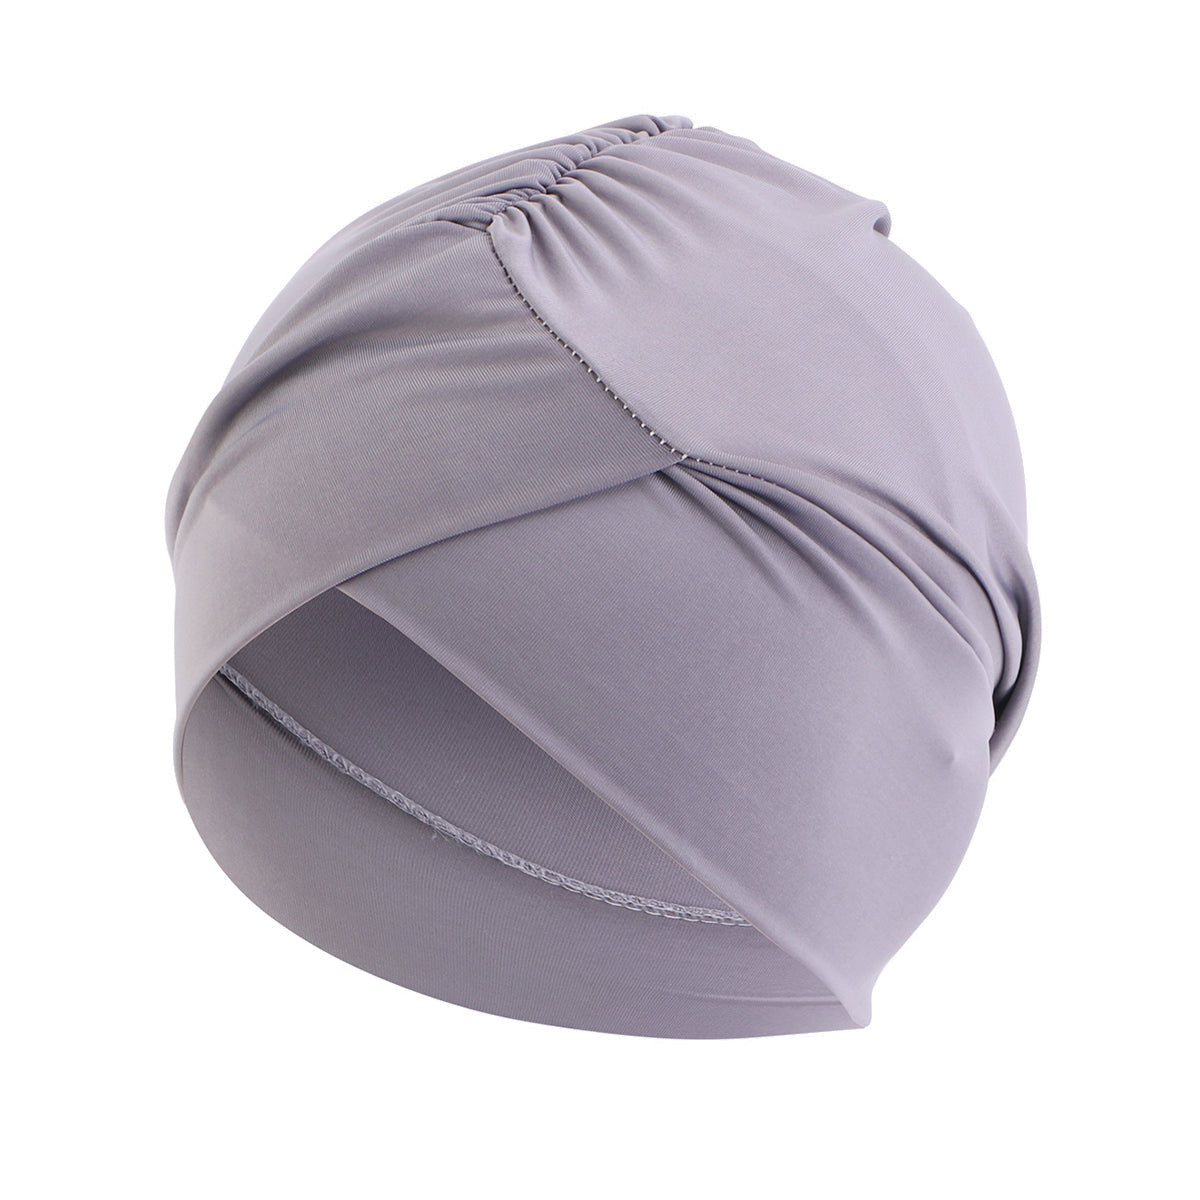 Unisex Swimming Turban Cap Head Wrap Solid Elastic Headband JDT-50